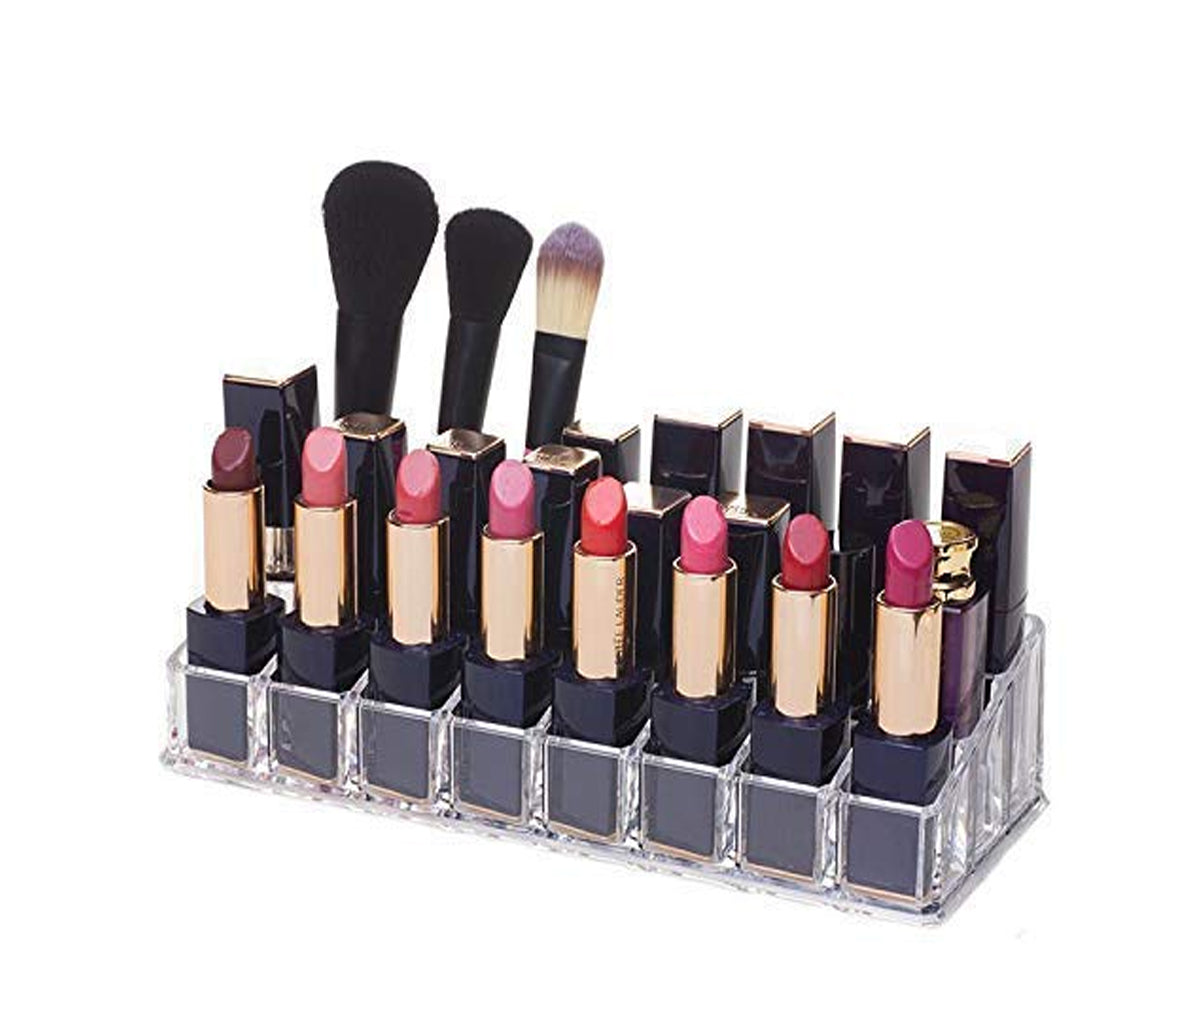 24 Holes Acrylic Lipstick Holder - A Stylish Way to Store Your Lipsticks